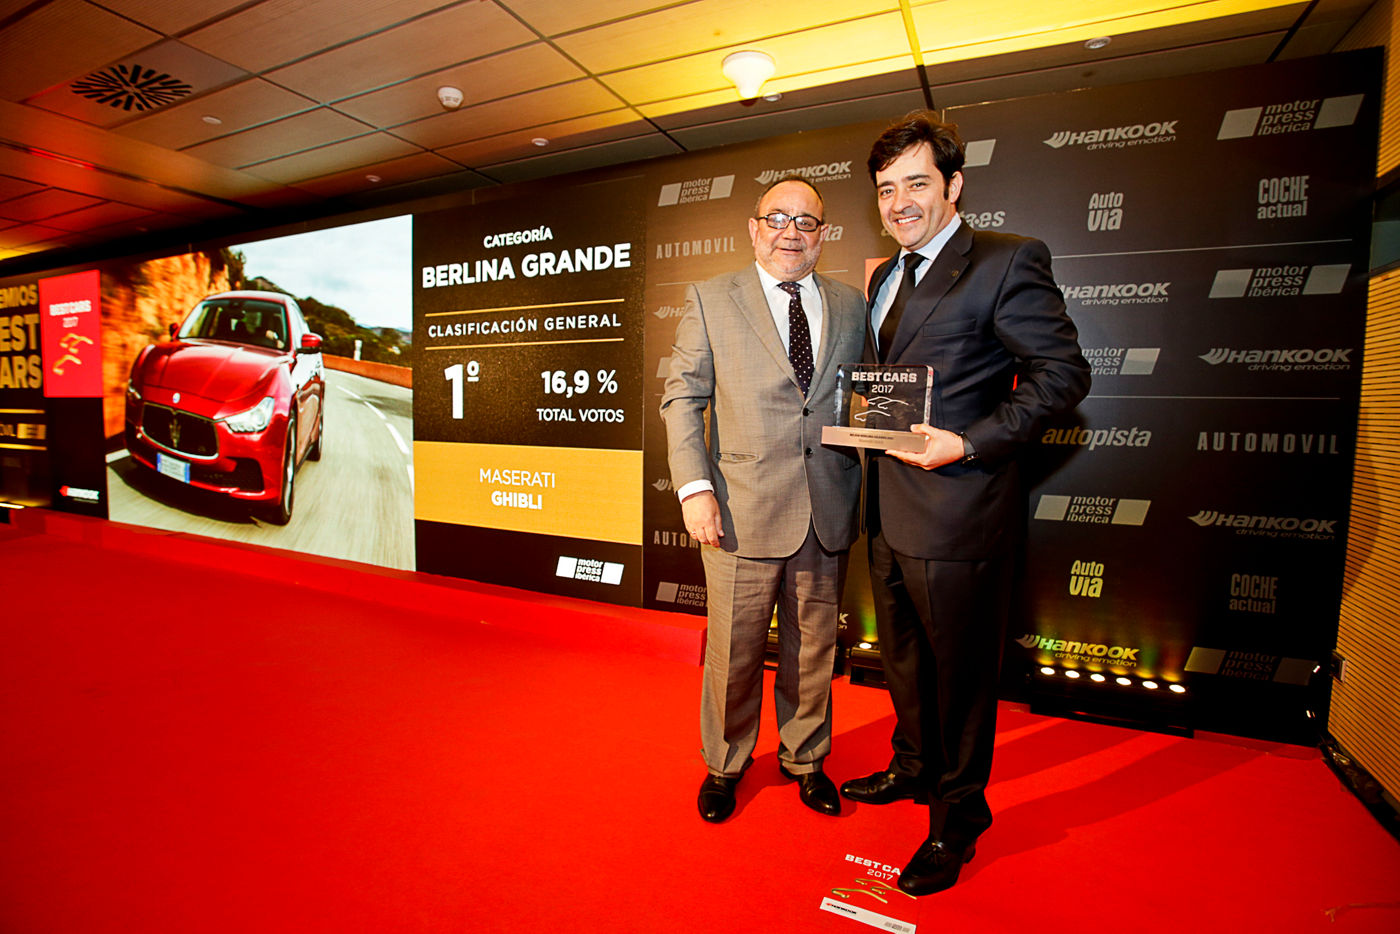 Premio Best Cars 2017 recibido por Maserati Ghibli de dos hombres